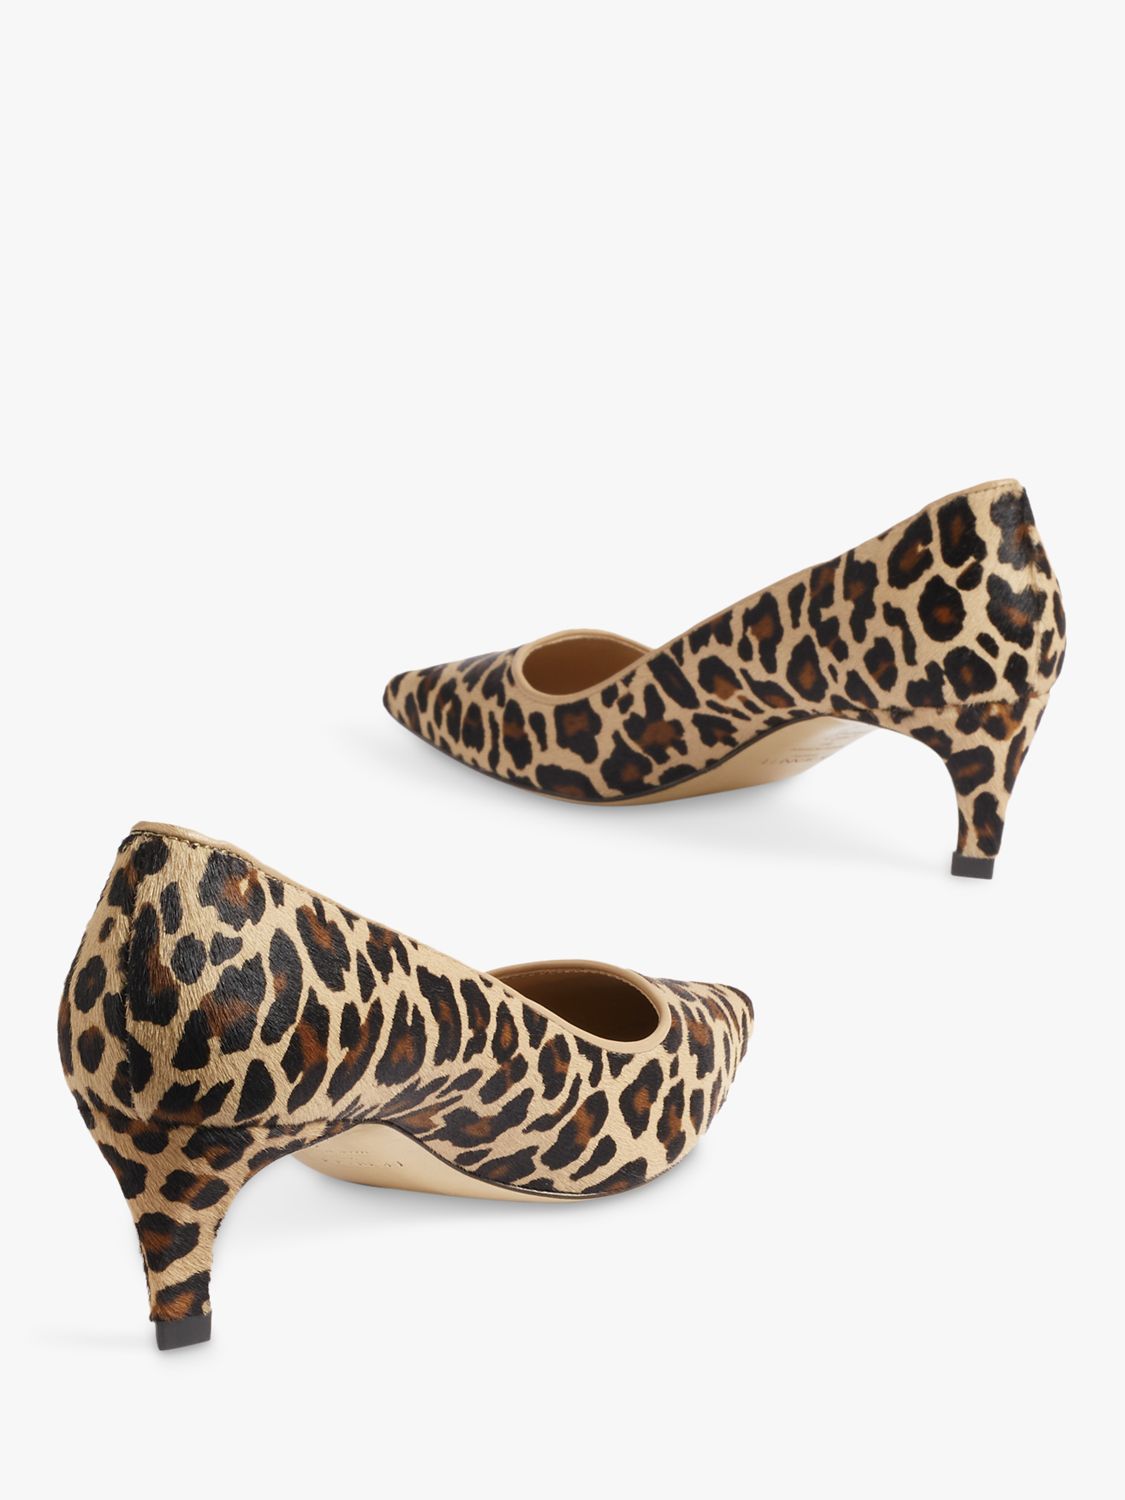 L.K.Bennett Ava Leopard Print Calf Hair Kitten Heel Court Shoes, Multi at John & Partners